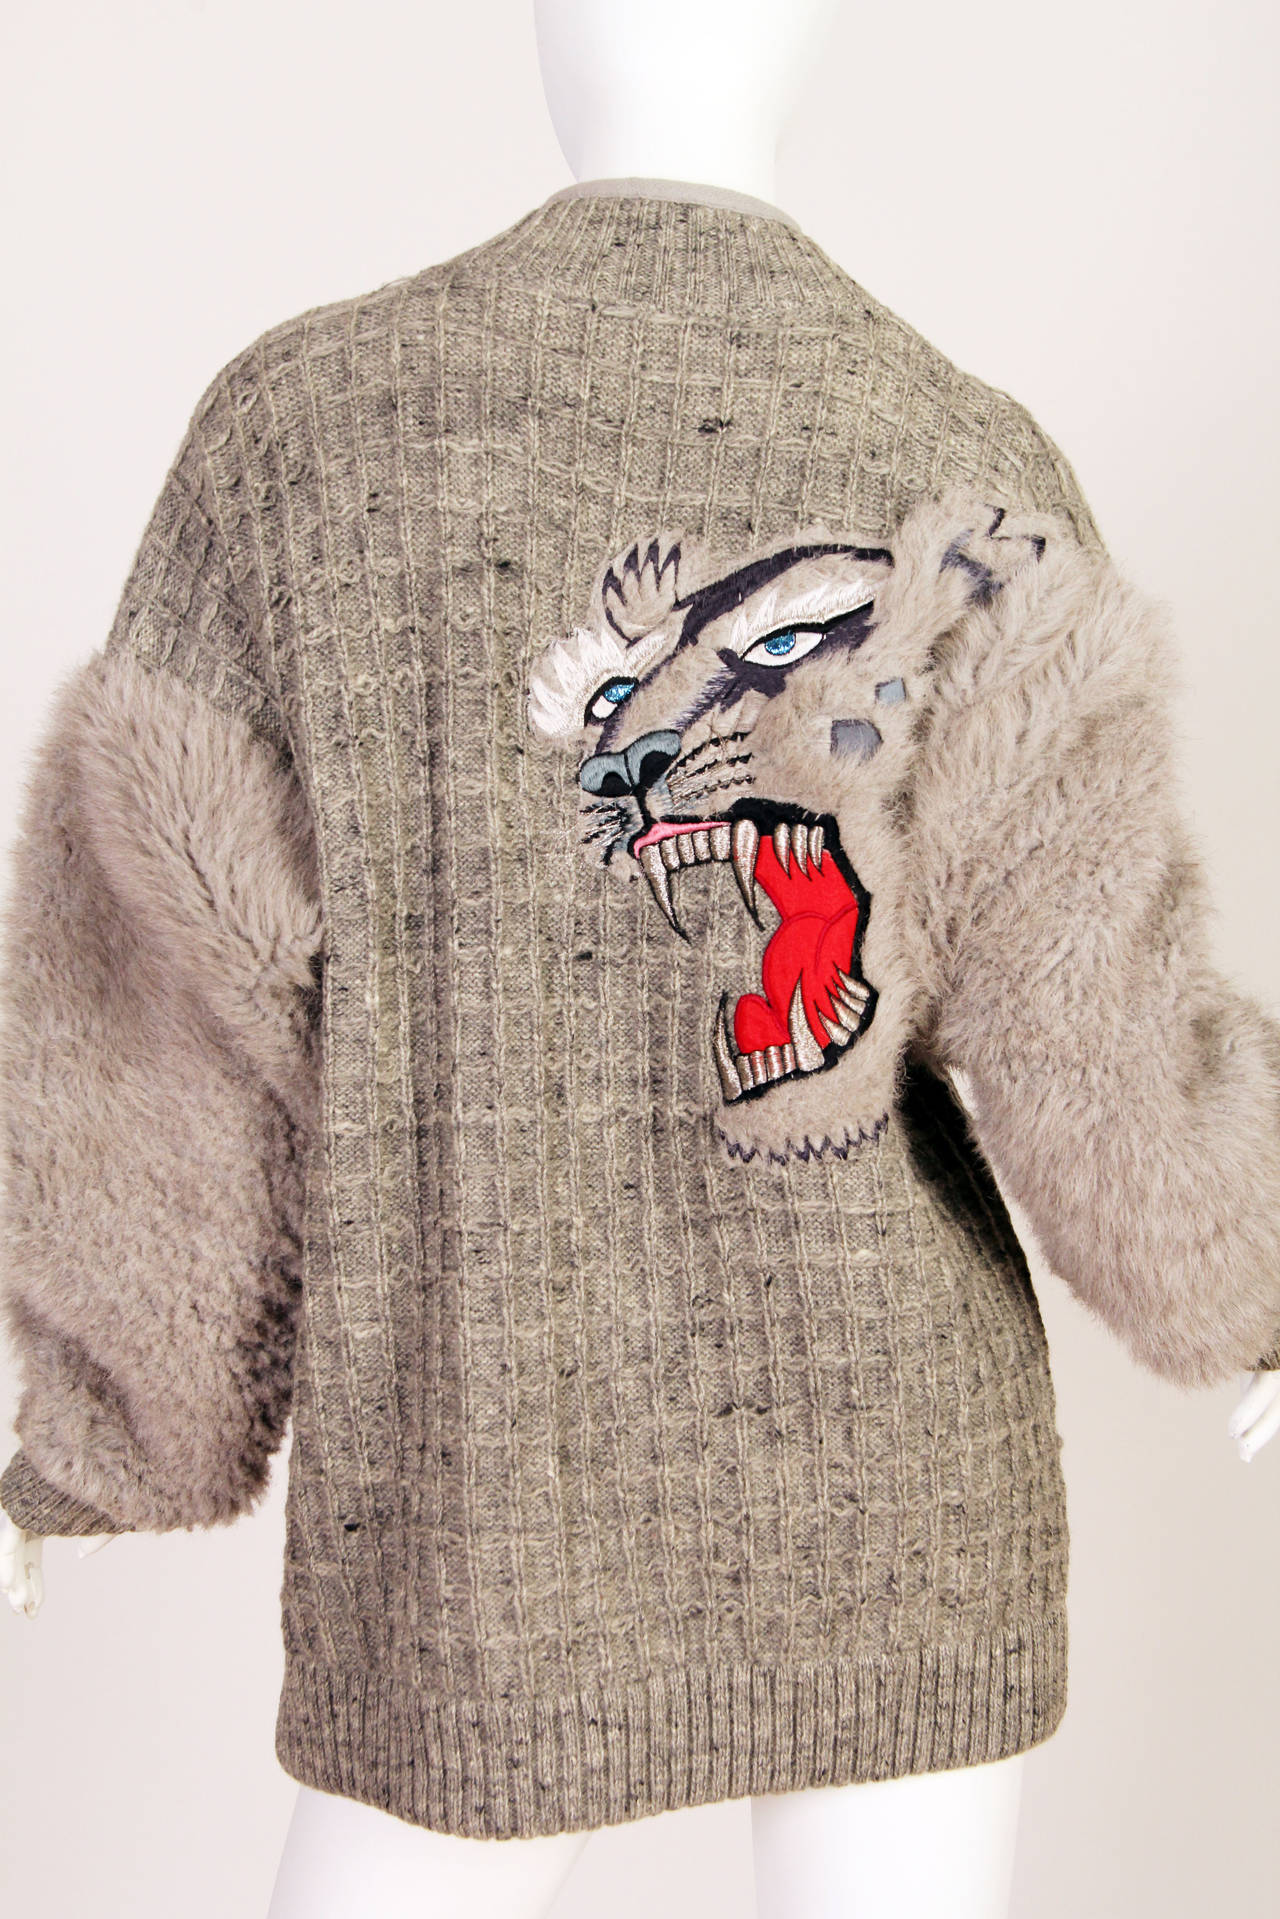 Women's 1990s KANSAI Incredible Snow Leopard Wool Sweater with Fur